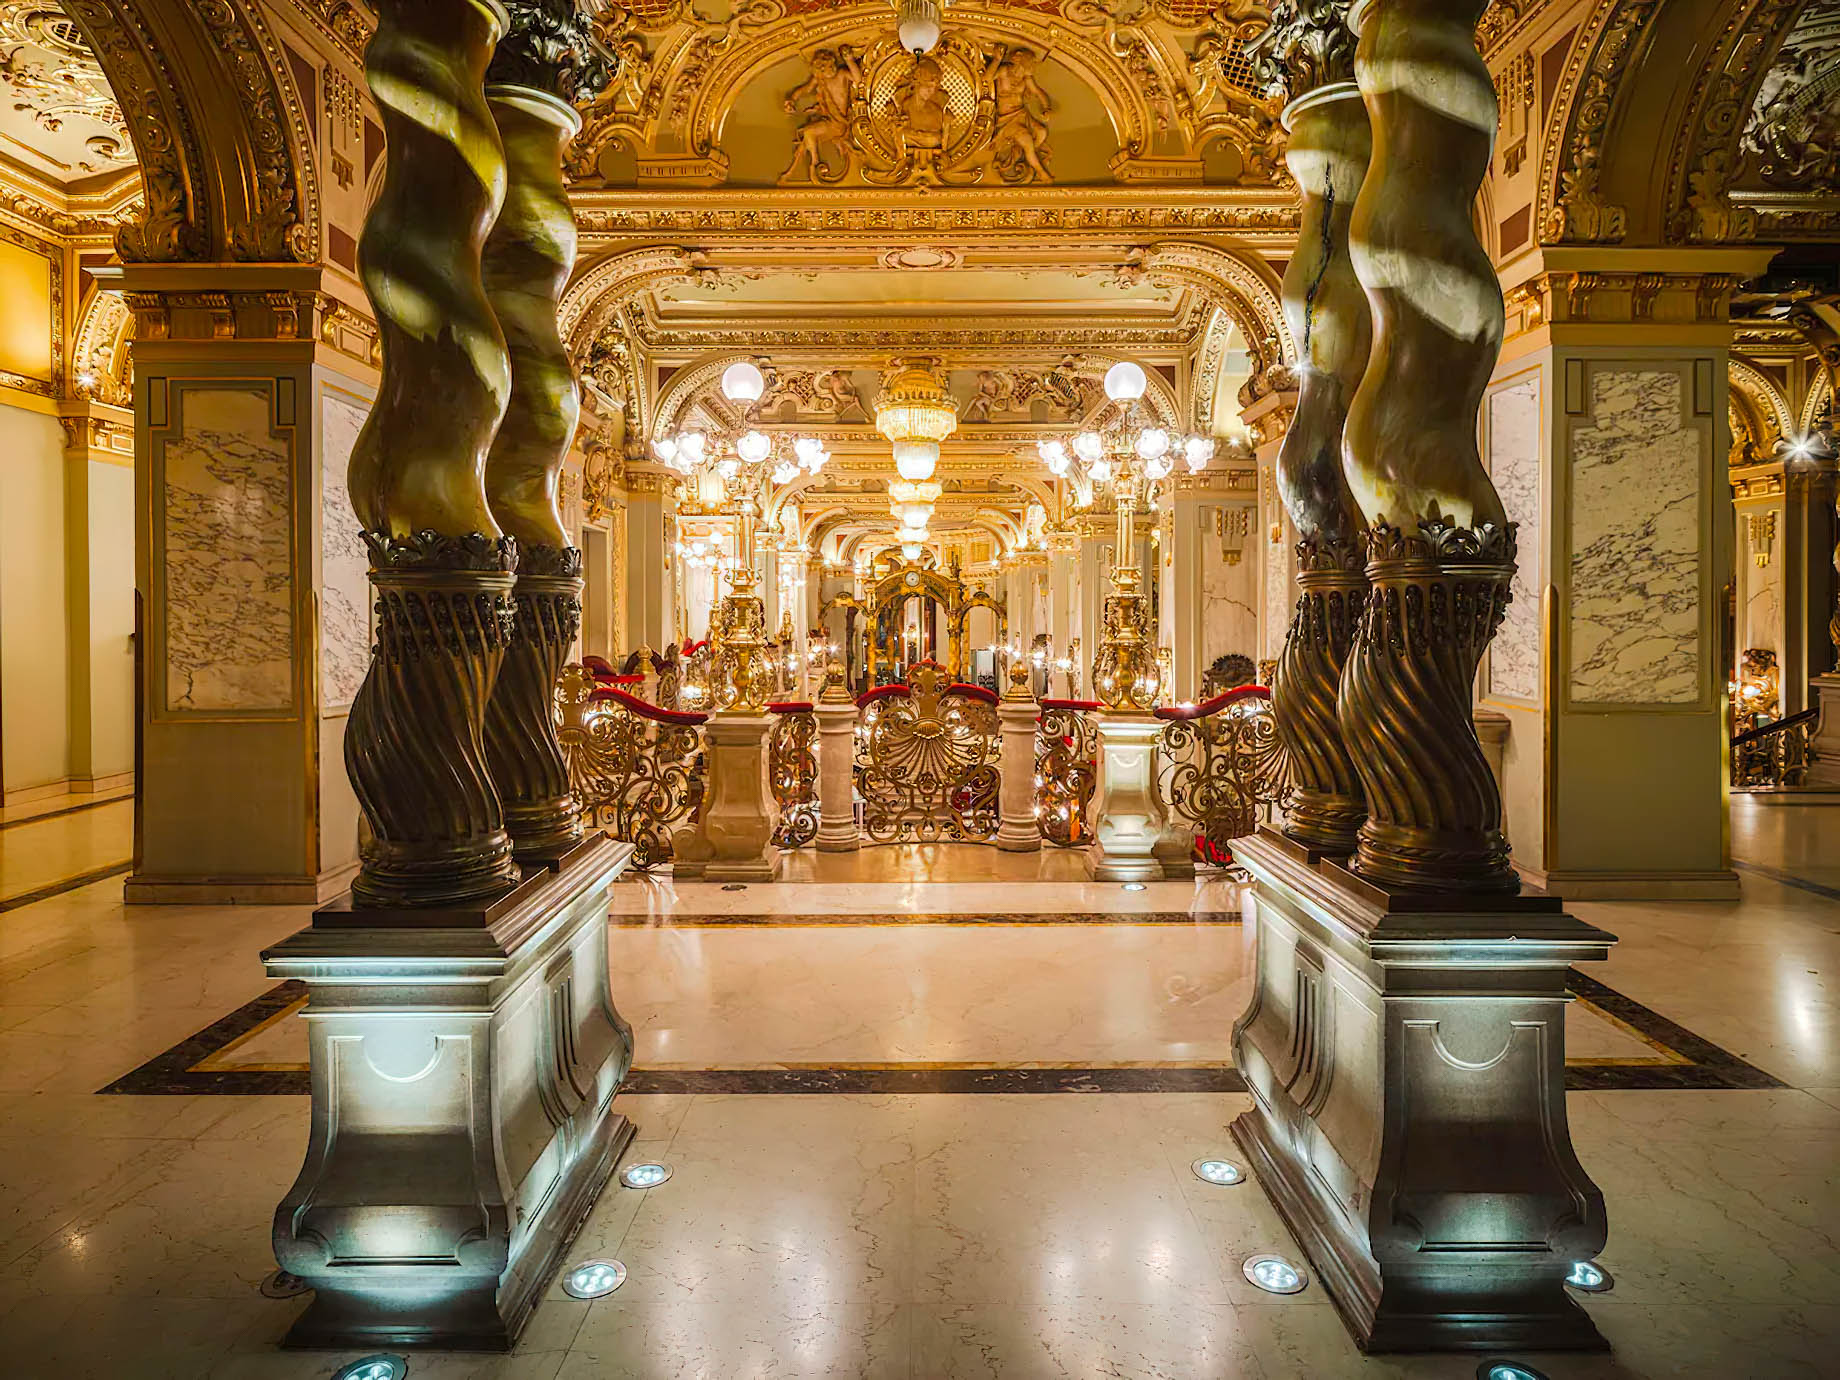 Anantara New York Palace Budapest Hotel - Hungary - New York Cafe